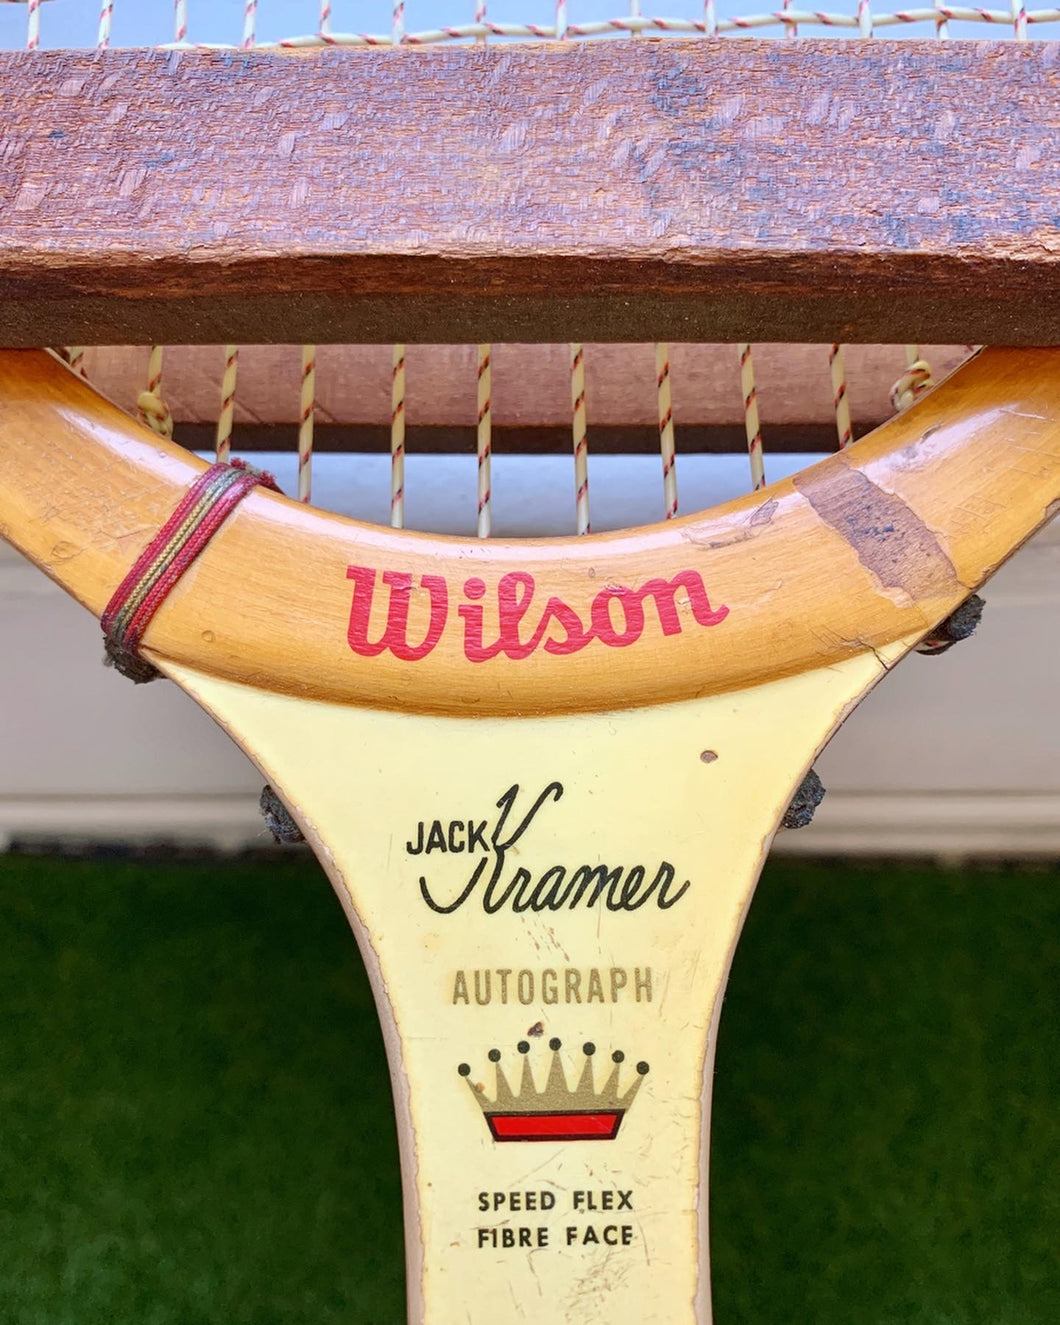 Vintage Wilson “Jack Kramer” wooden tennis racket